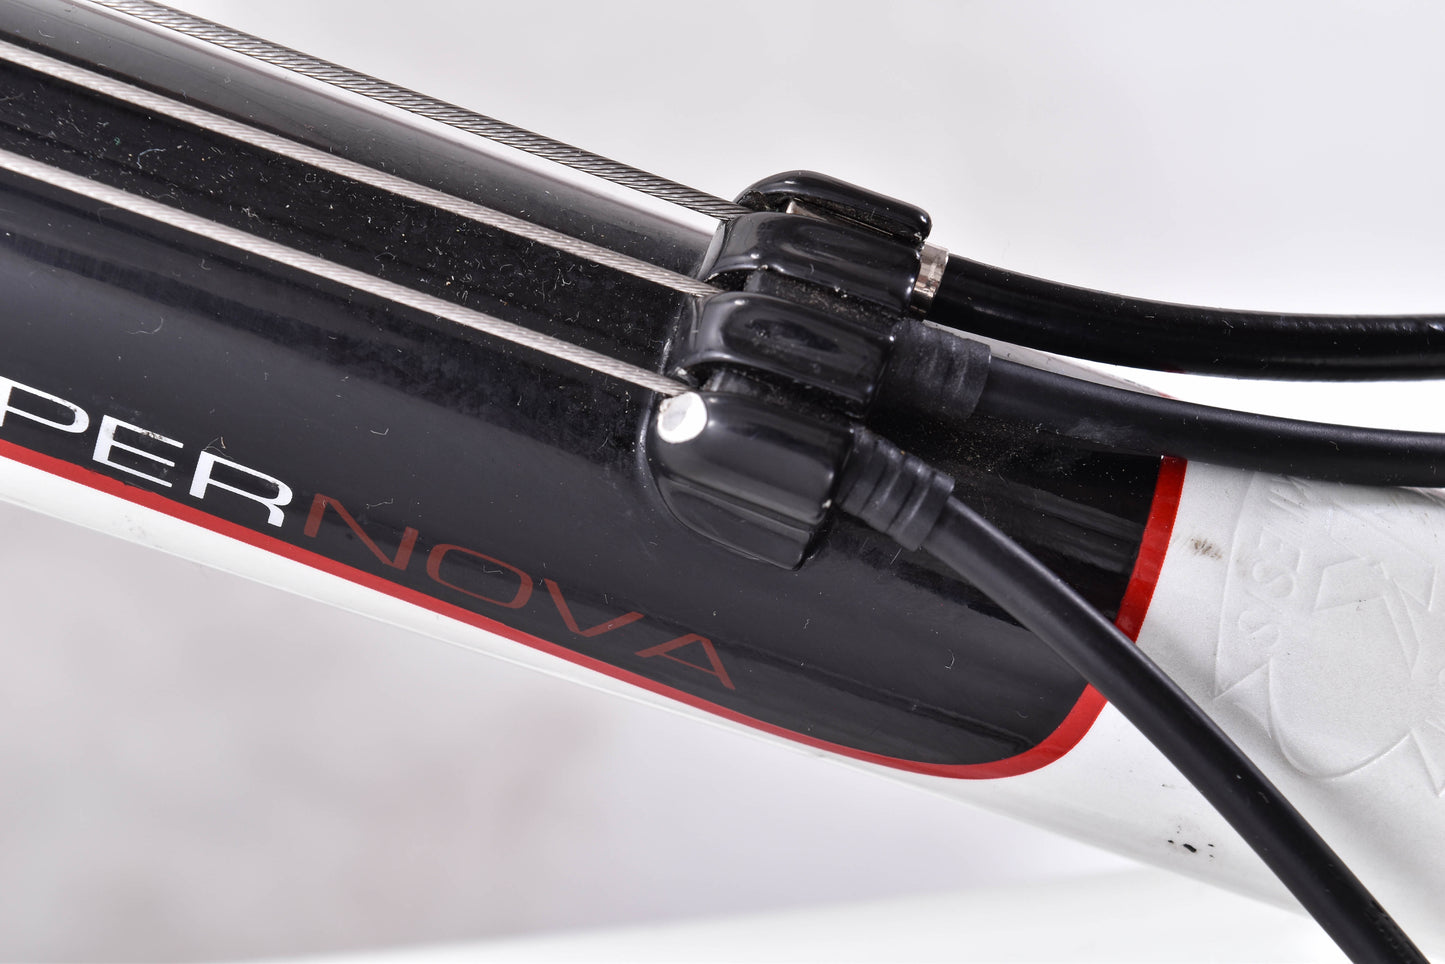 USED Jamis Supernova 54cm Aluminum/Carbon Cyclocross/Gravel Bike Shimano Ultegra 2x10 speed Black/White